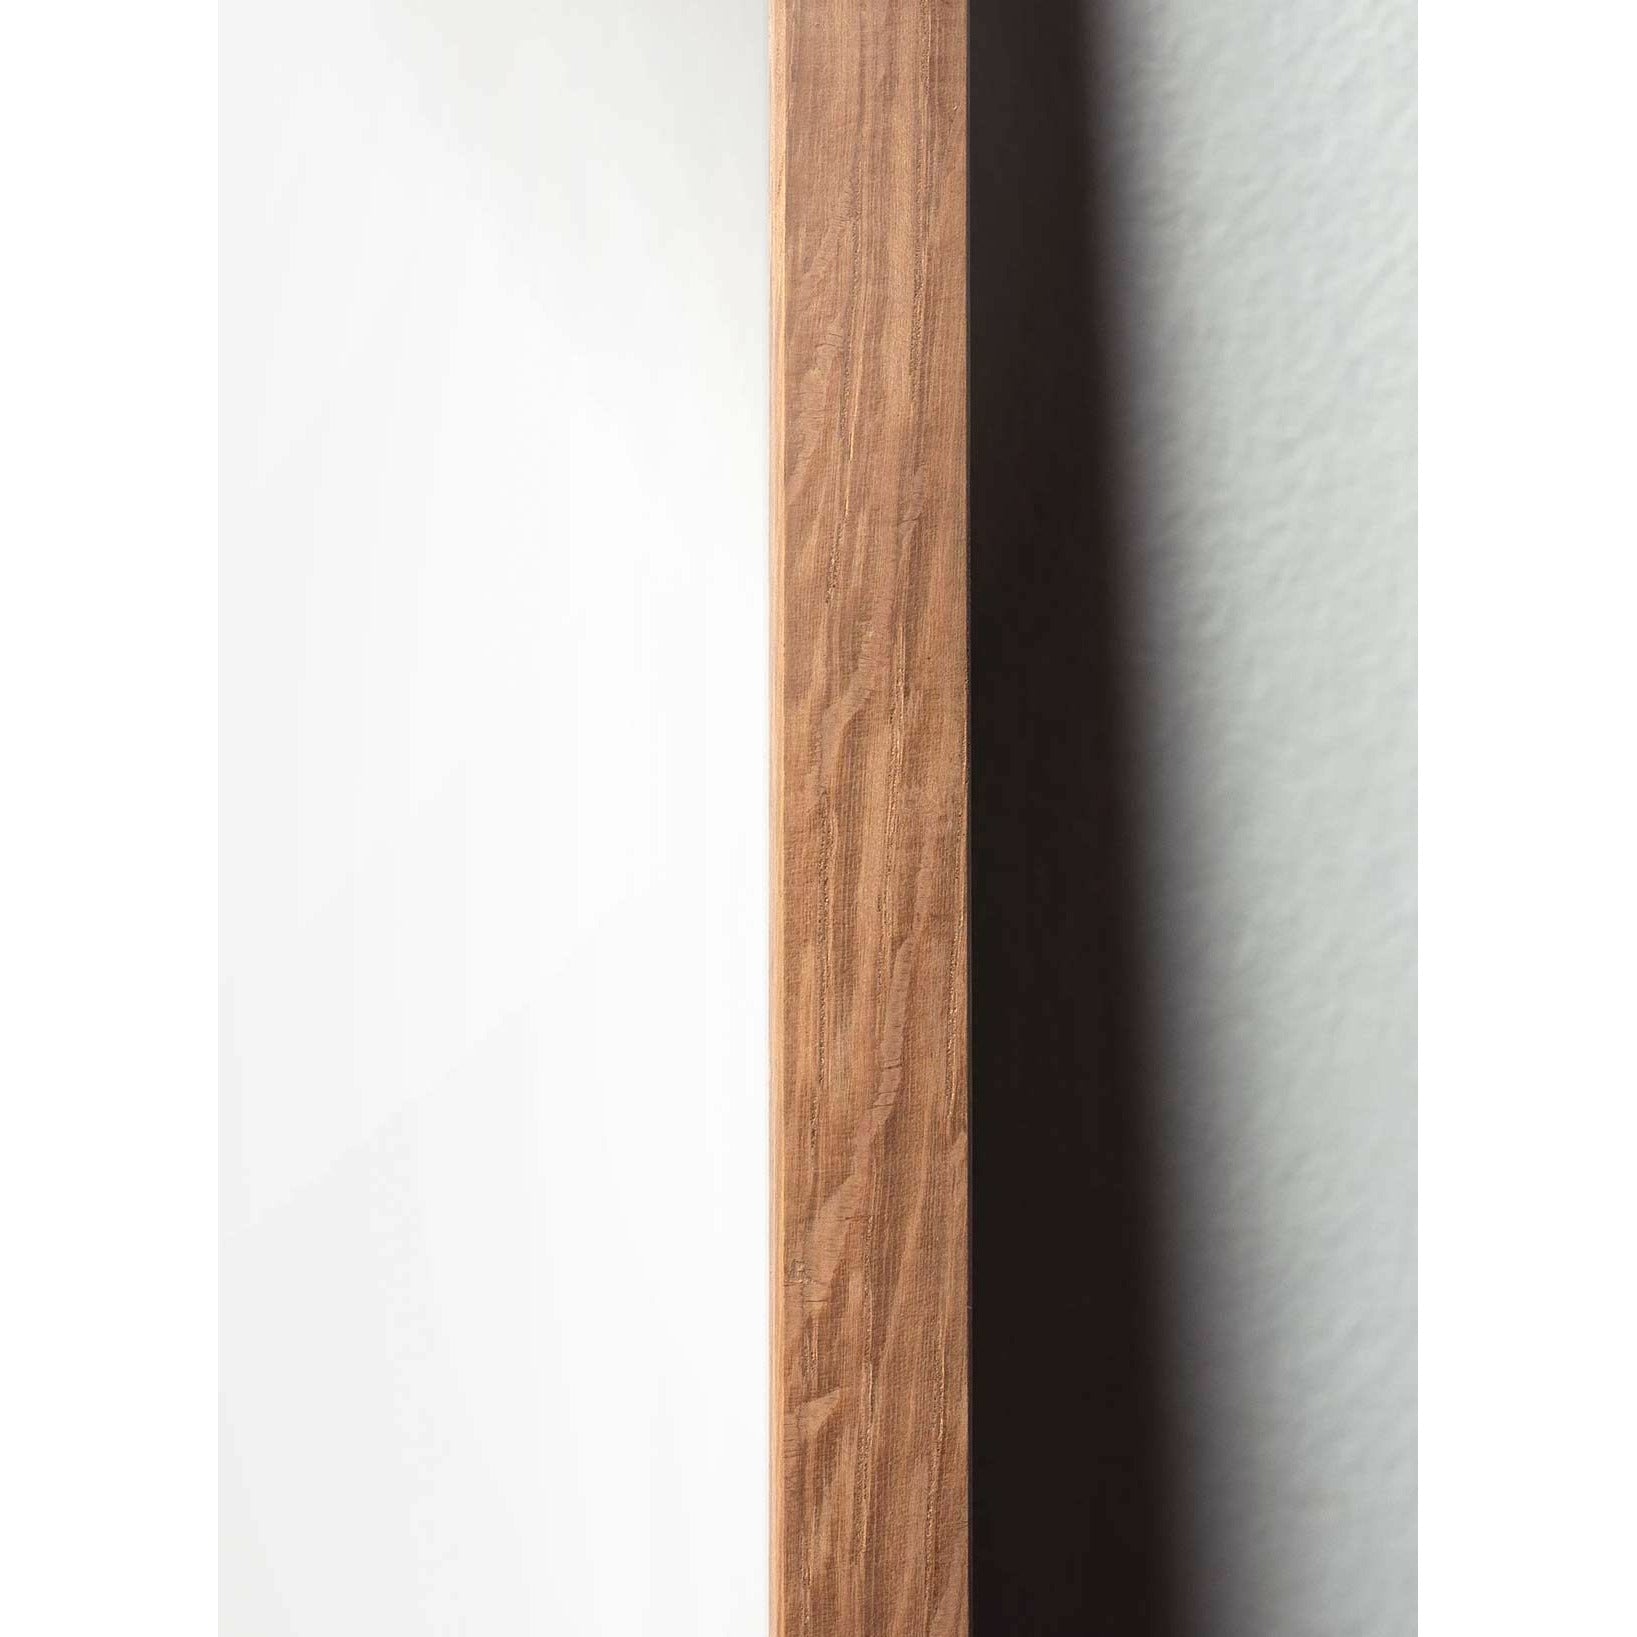 Brainchild Myrlinjeposter, ram i lätt trä 70x100 cm, vit bakgrund